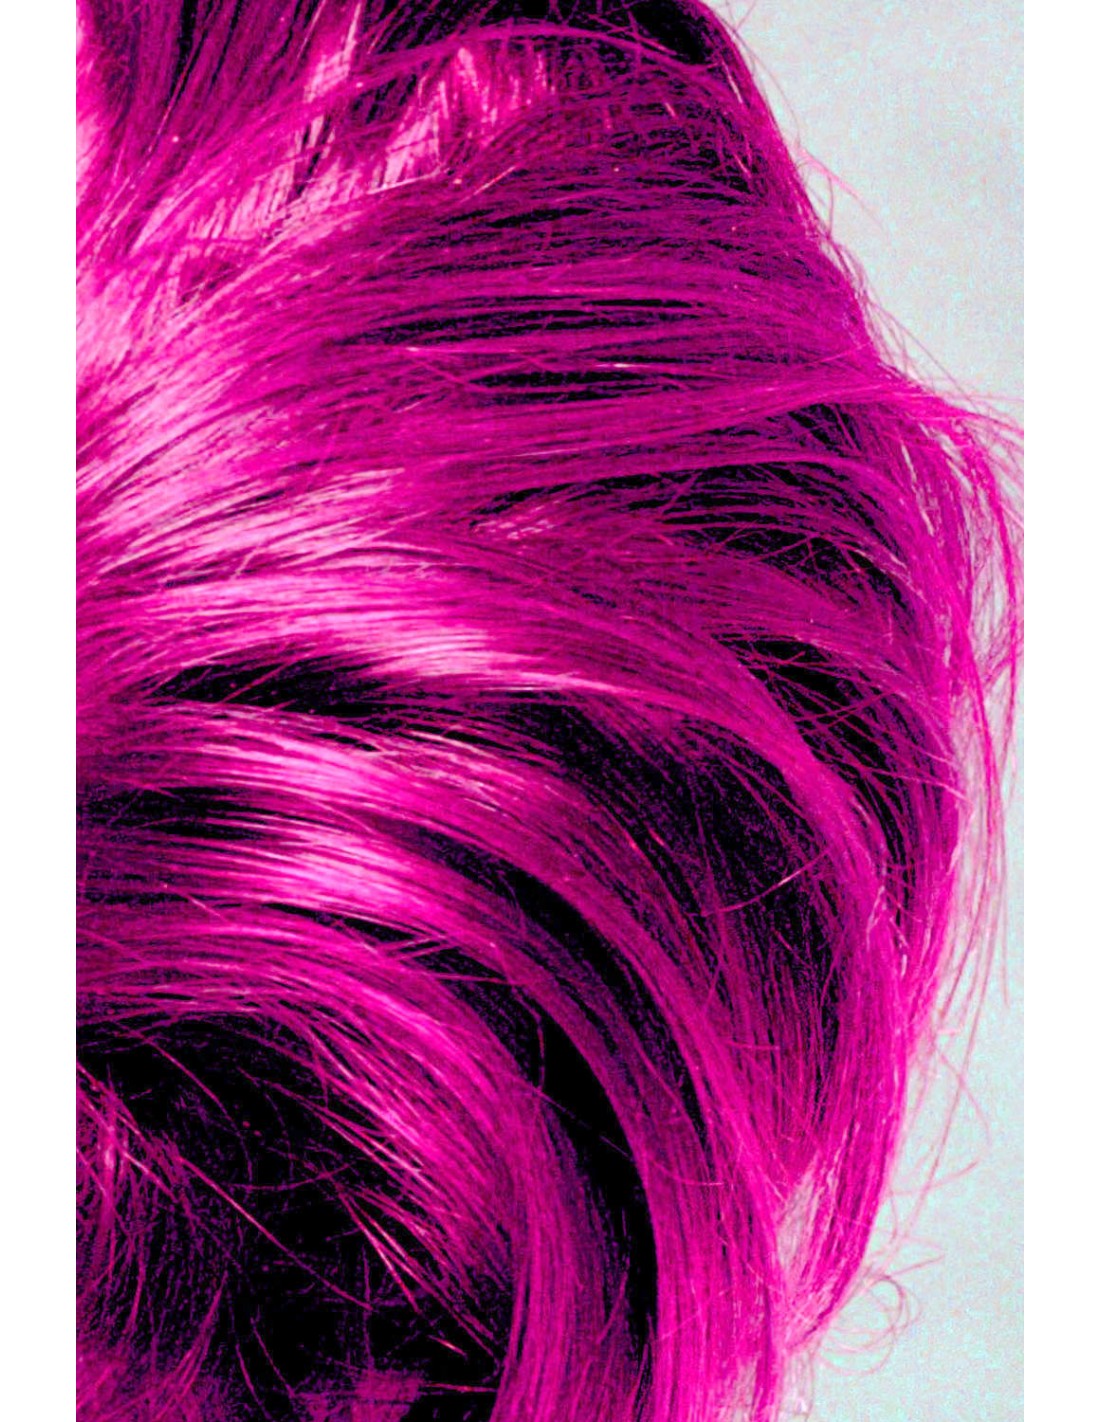 https://www.madamechocolat-shop.com/20133-thickbox_default/manic-panic-hair-dye-hot-hot-pink-classic-cream-formula.jpg